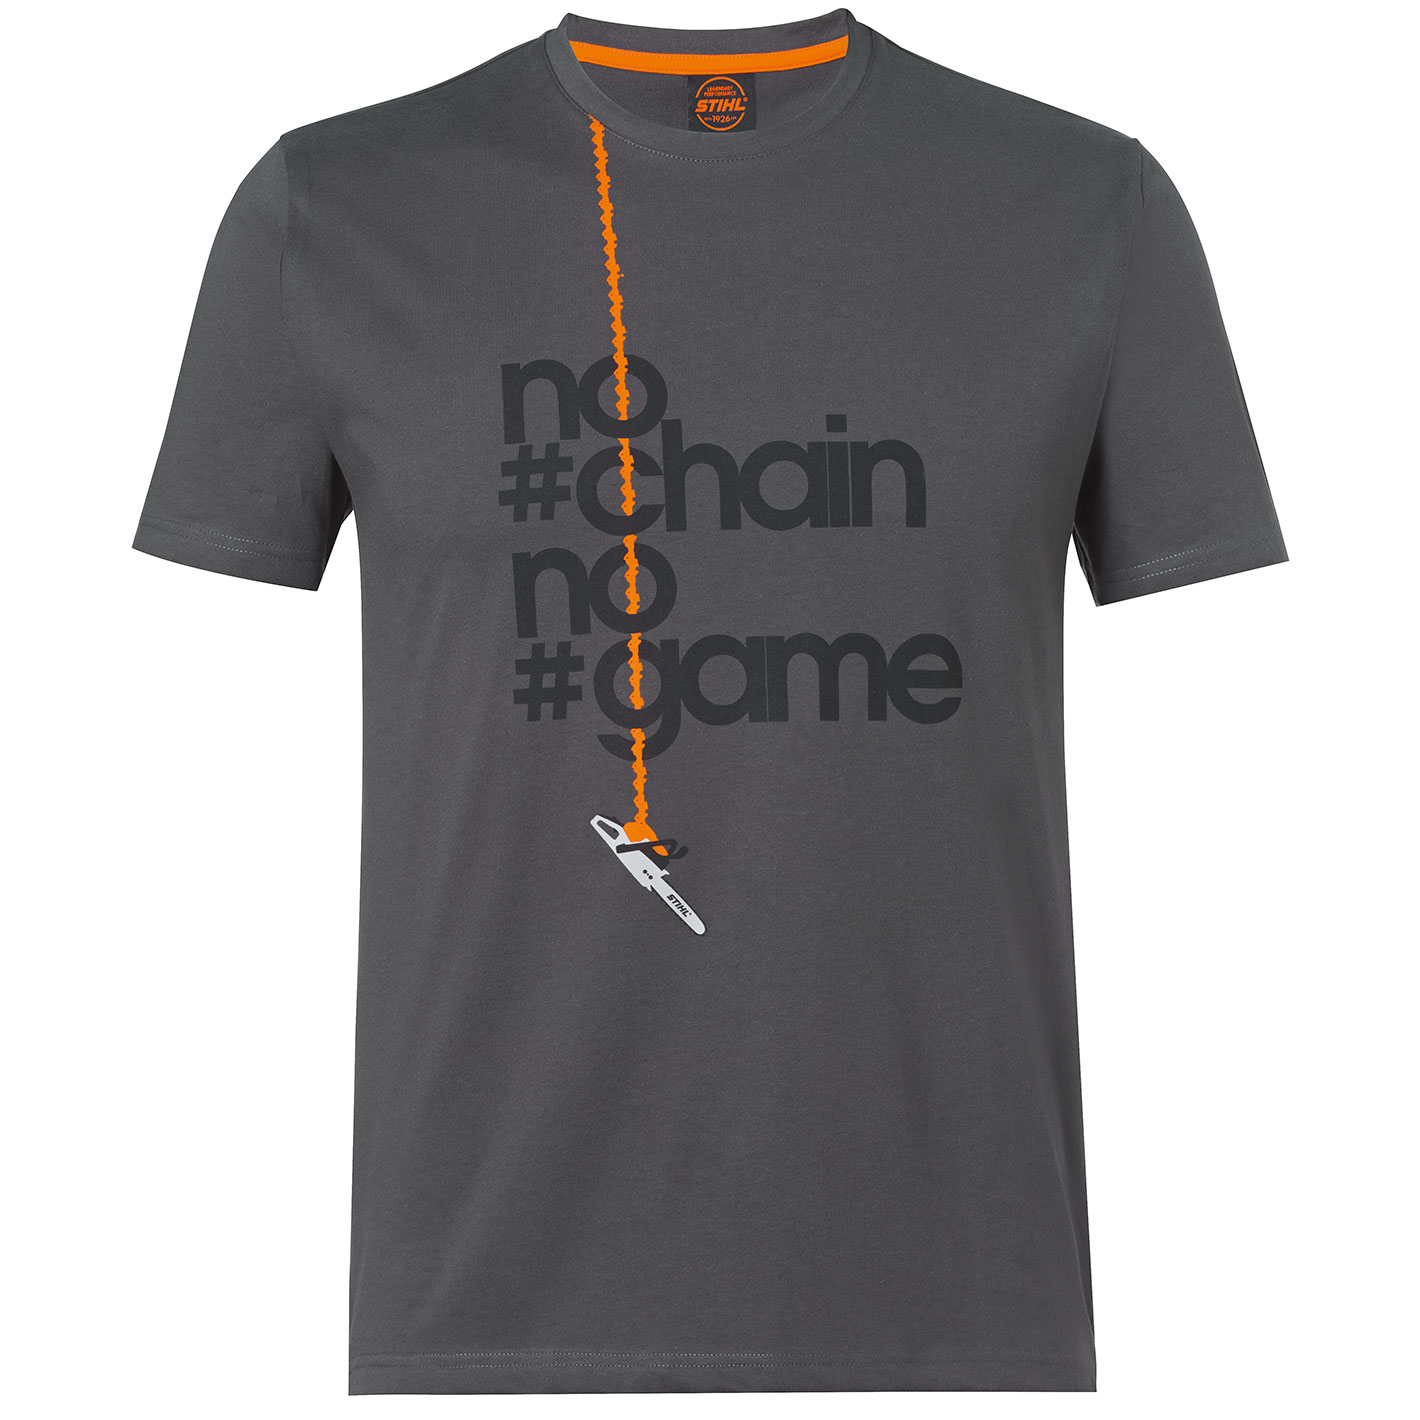 T-shirt "No chain"